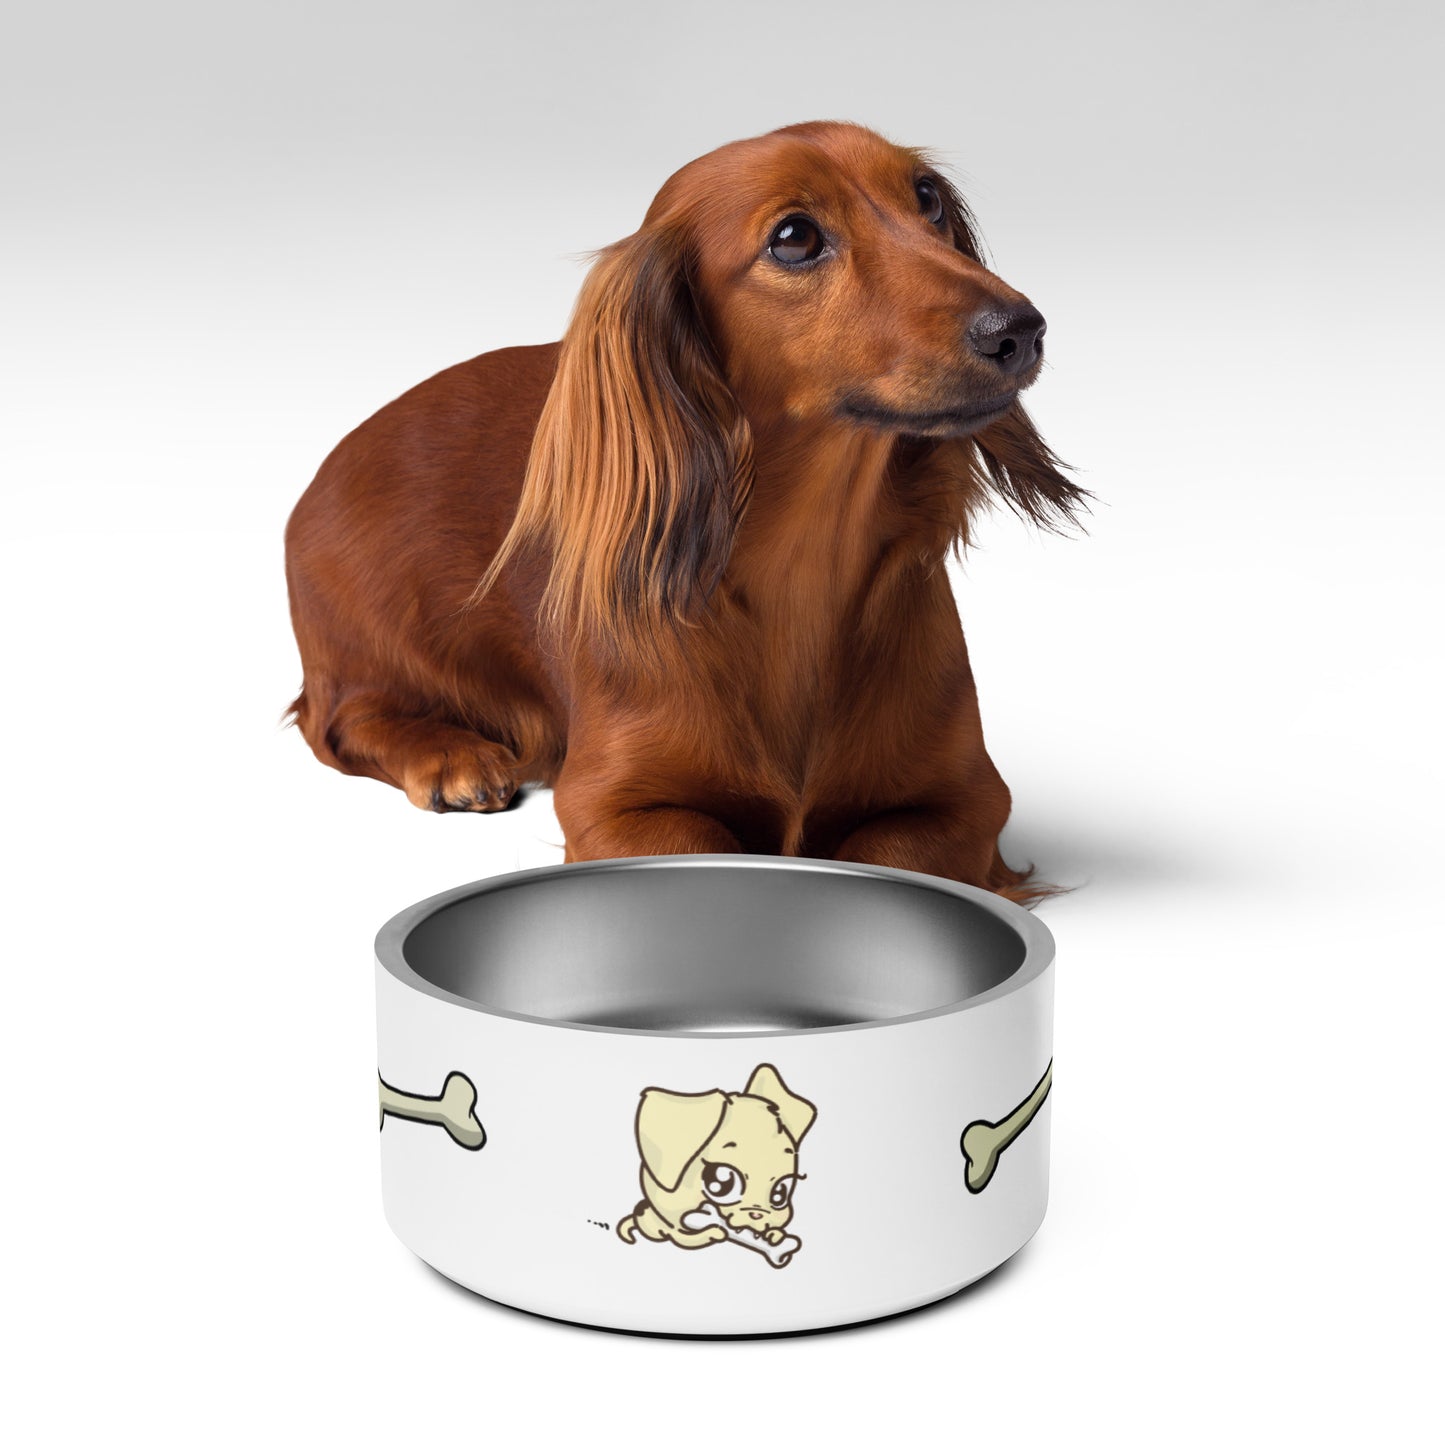 Pet bowl - Dog and Yellow Bone